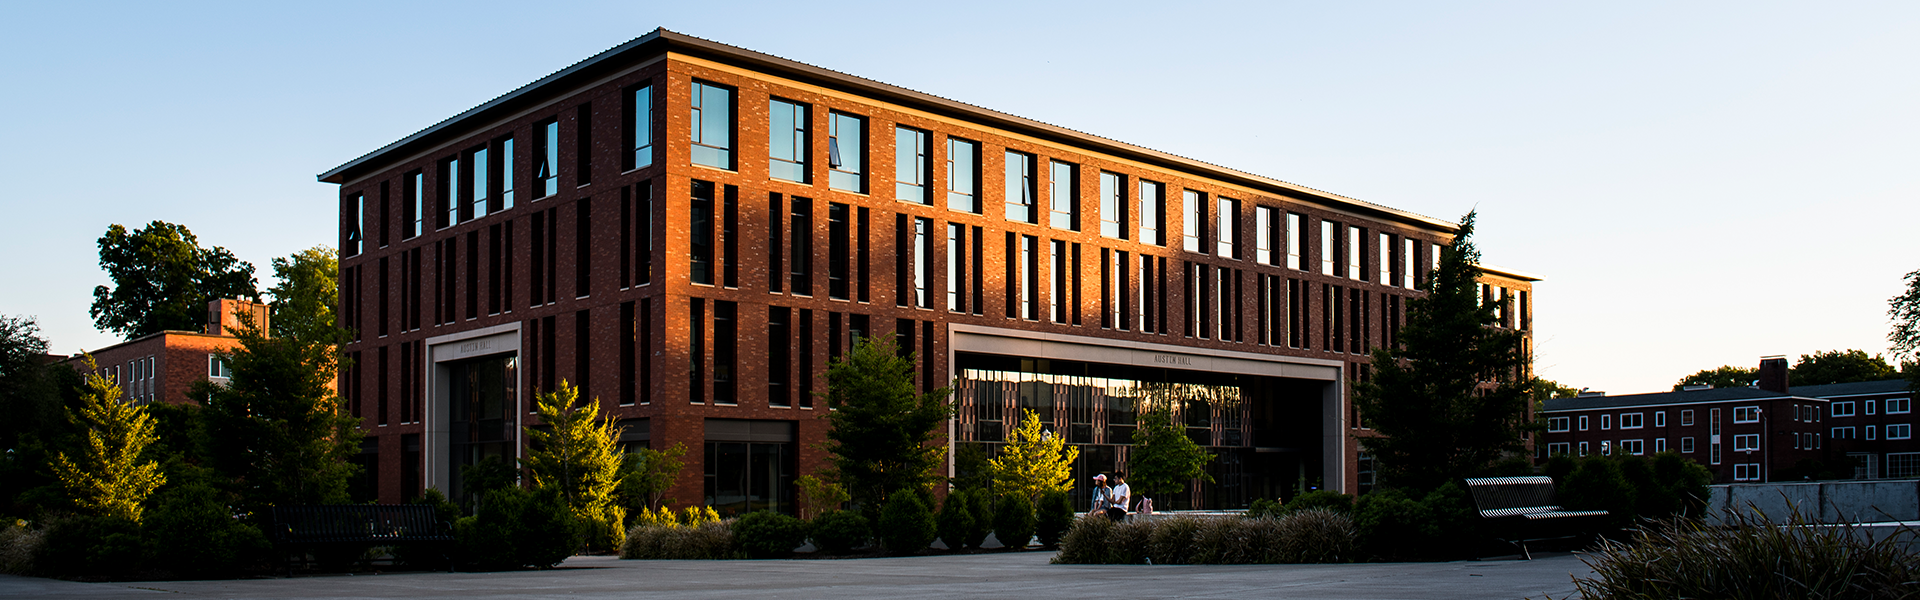 OSU Campus in Corvallis Business Building